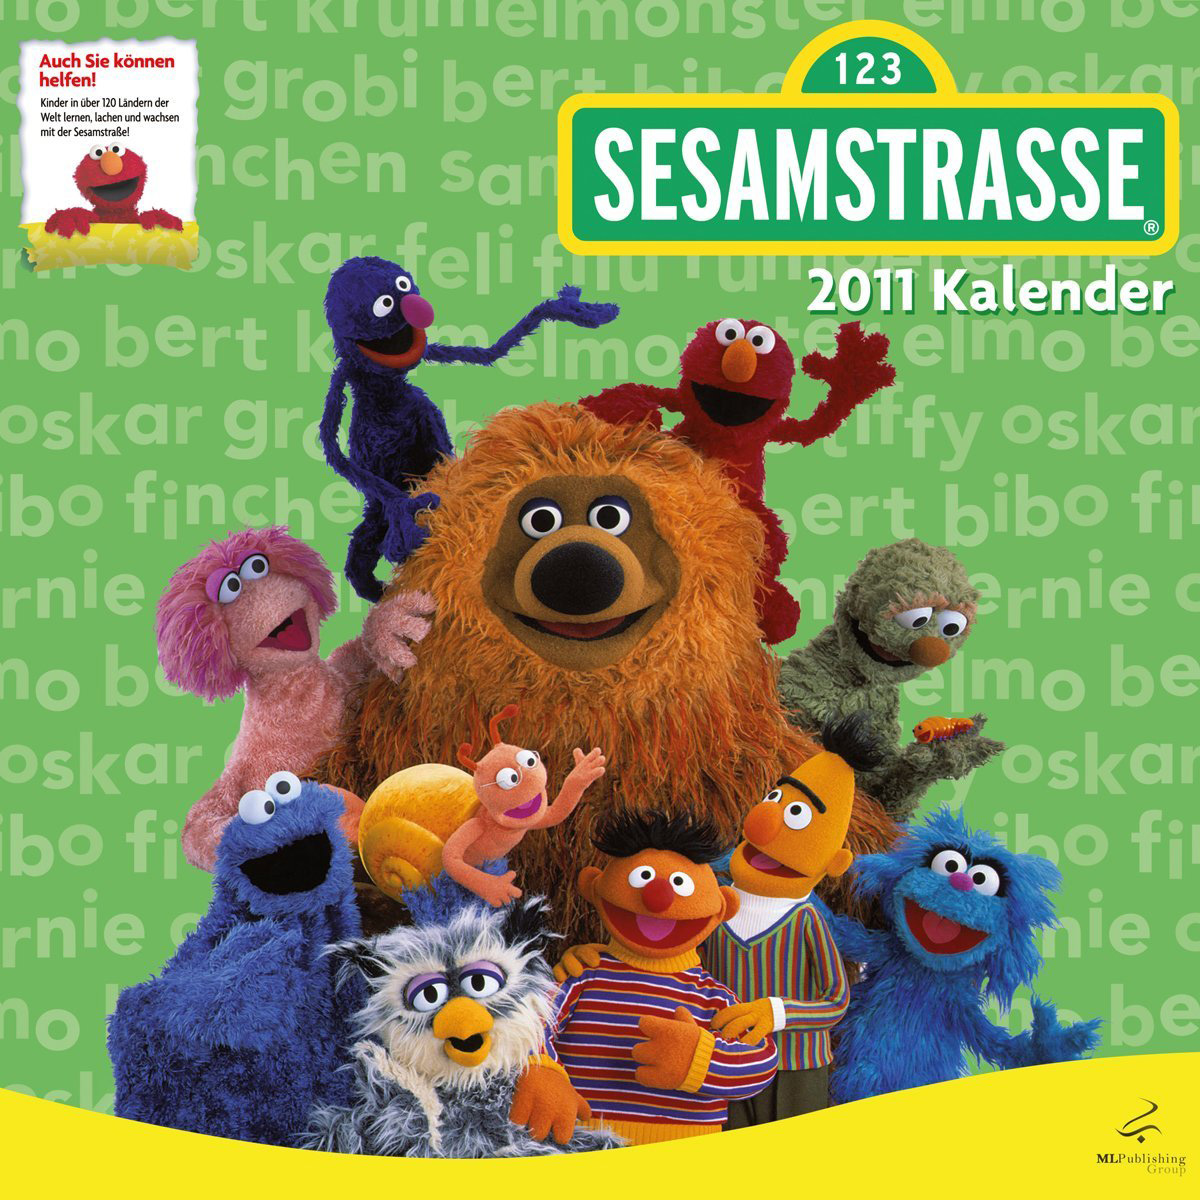 Sesamstrasse calendars | Muppet Wiki | FANDOM powered by Wikia